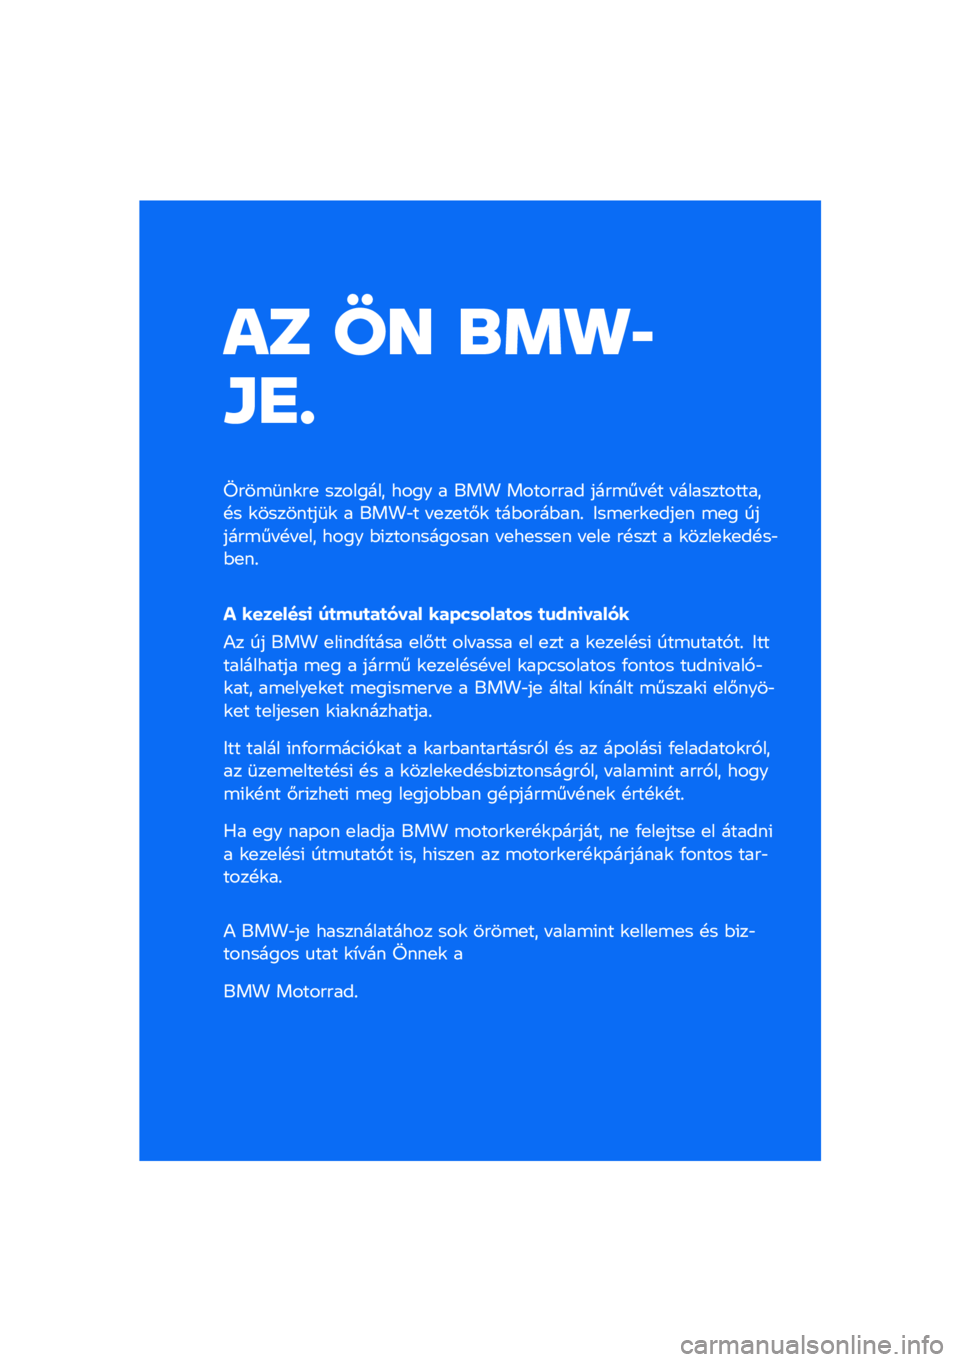 BMW MOTORRAD R NINE T URVAN G/S 2021  Kezelési útmutató (in Hungarian) �� �� �\b�	�
�
�\f�
�
����\b�	��\f��
 �������� ���� � ��� �������� ����\b�� �!� � ������������!� �\f��������	�\f � ����"� � �
��
��#�\